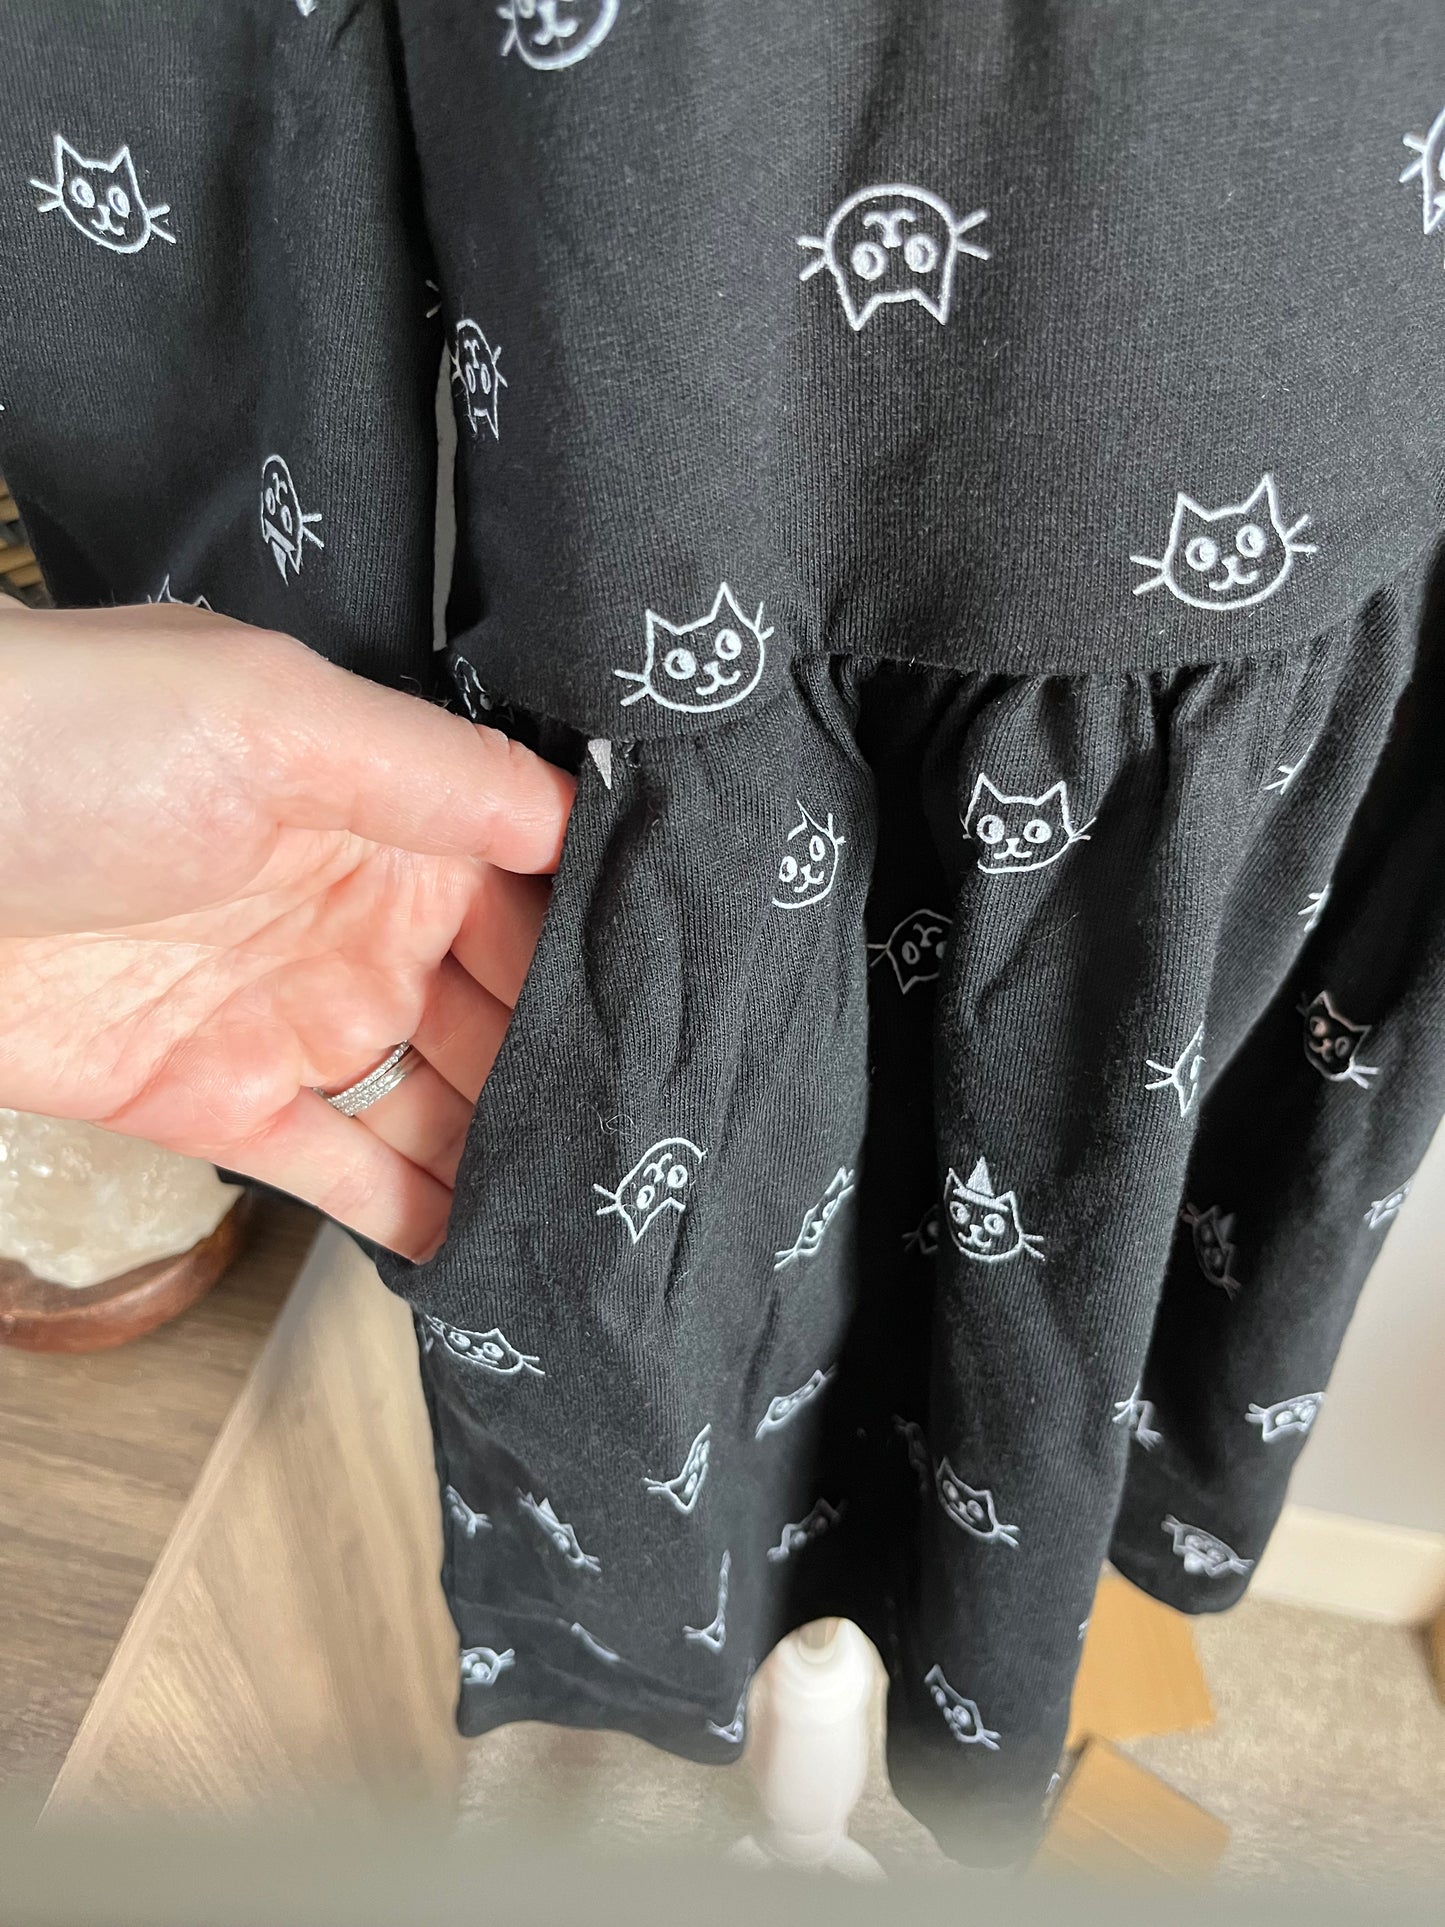 NWT Size L (10/12) Cat & Jack Cat Dress with pockets!